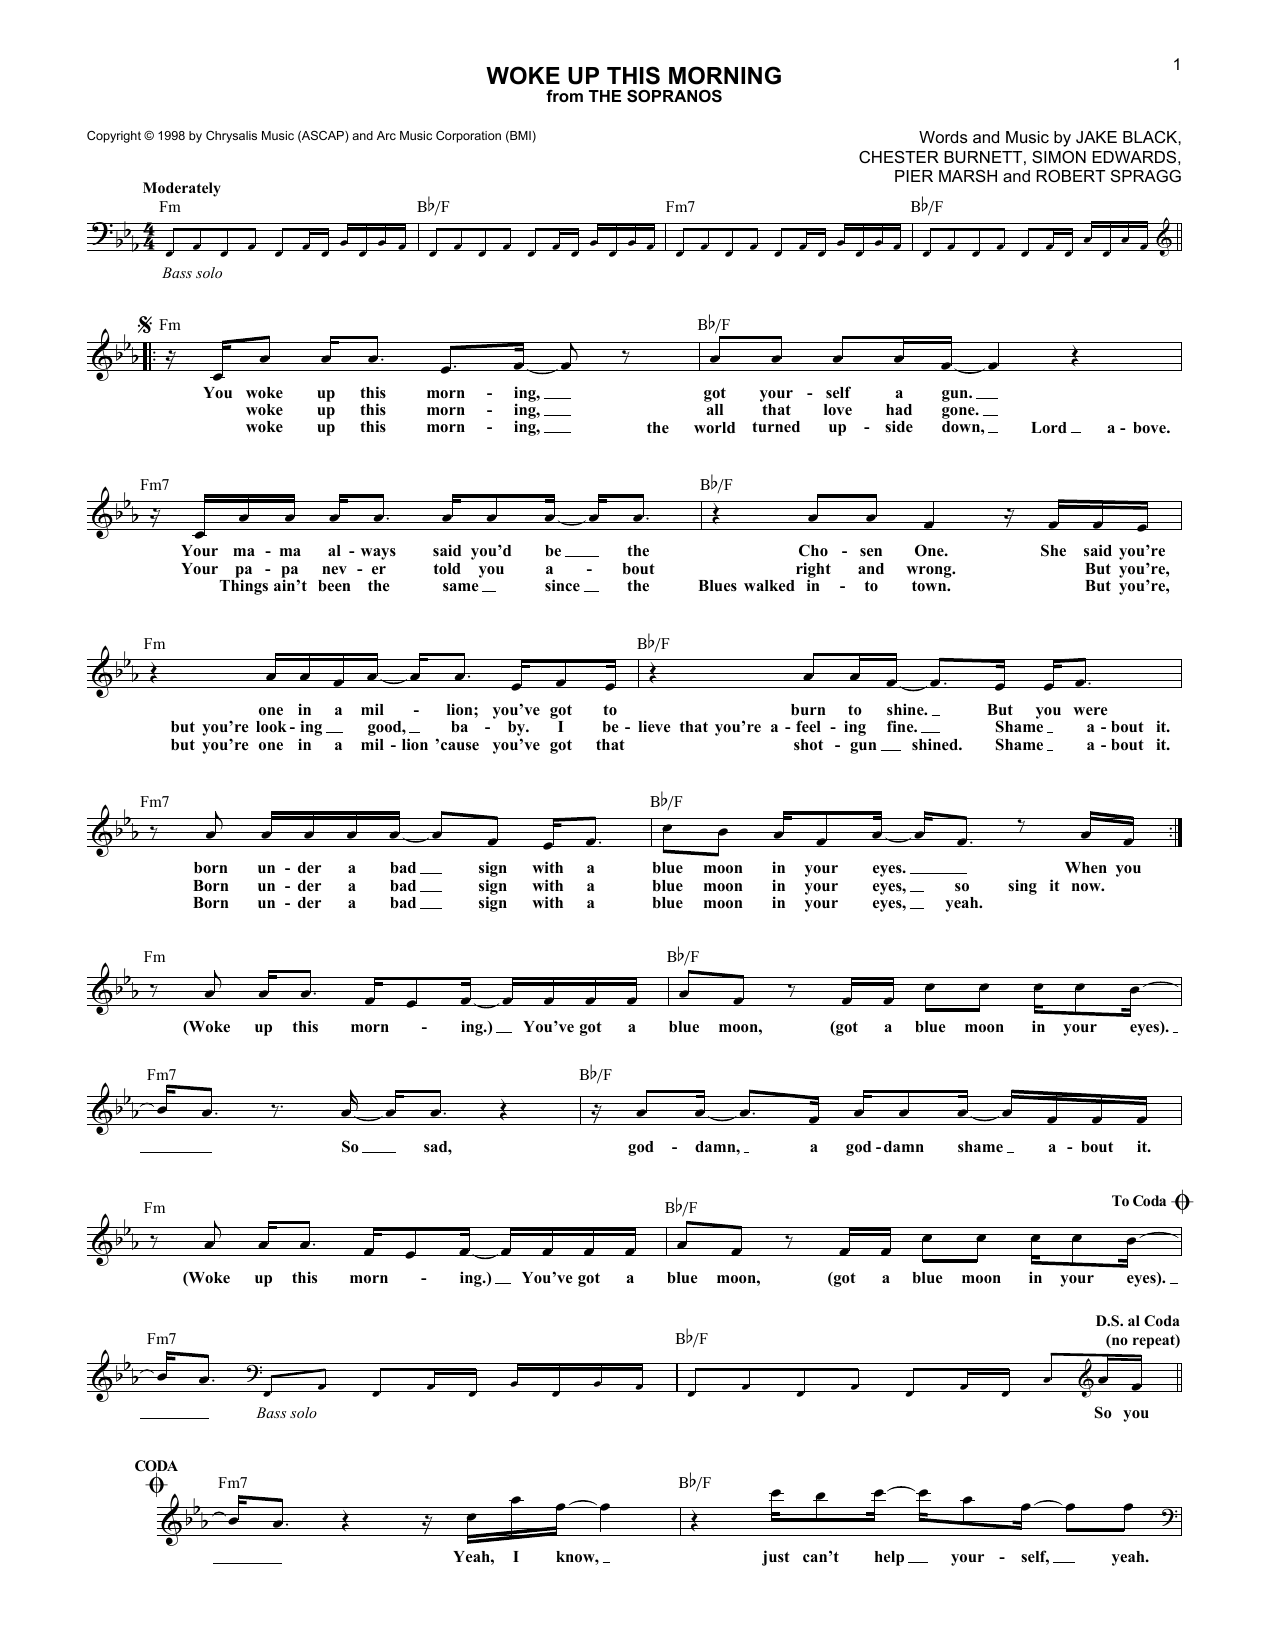 Alabama 3 Woke Up This Morning Sheet Music Notes & Chords for Melody Line, Lyrics & Chords - Download or Print PDF